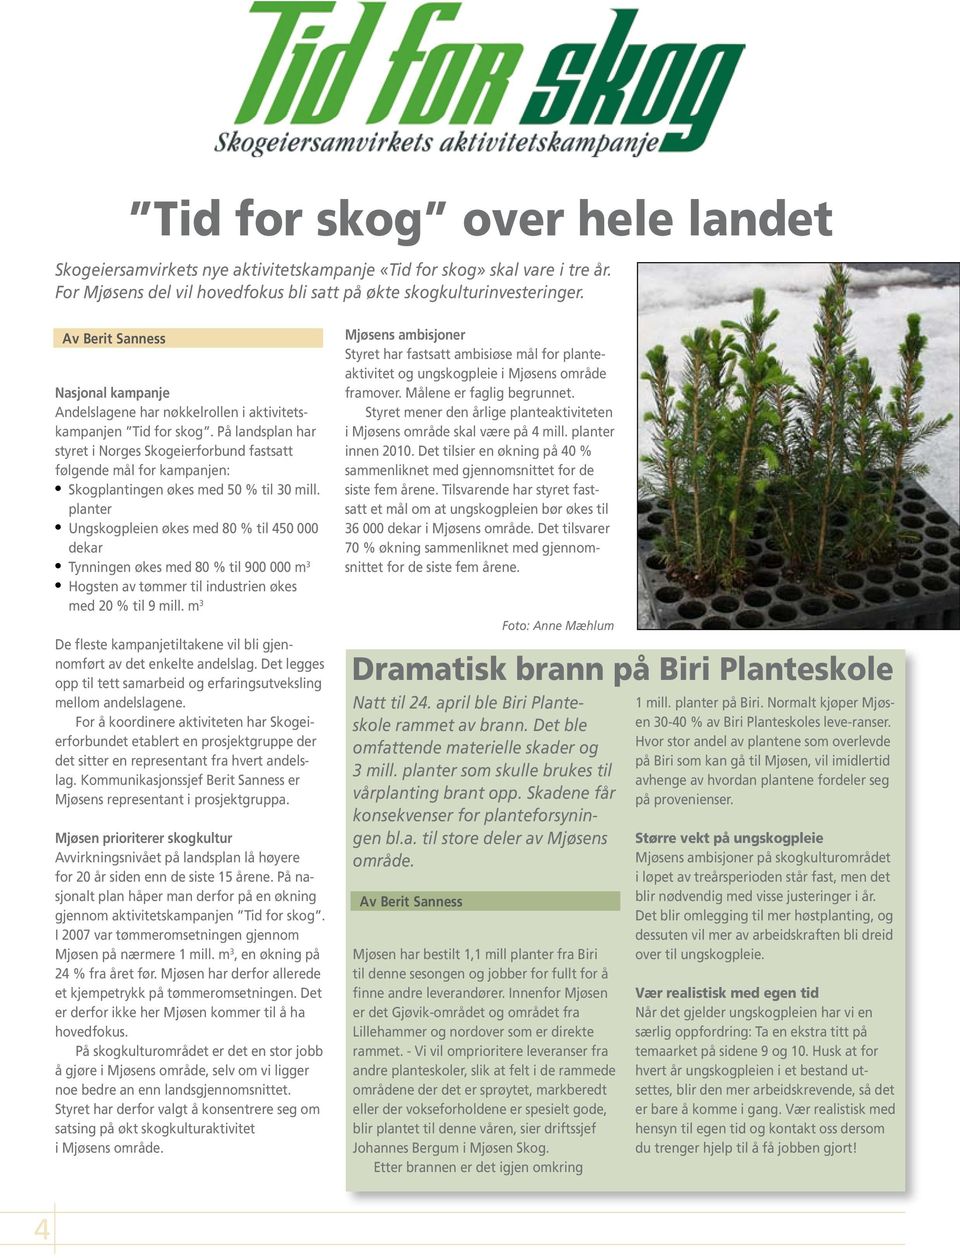 På landsplan har styret i Norges Skogeierforbund fastsatt følgende mål for kampanjen: Skogplantingen økes med 50 % til 30 mill.